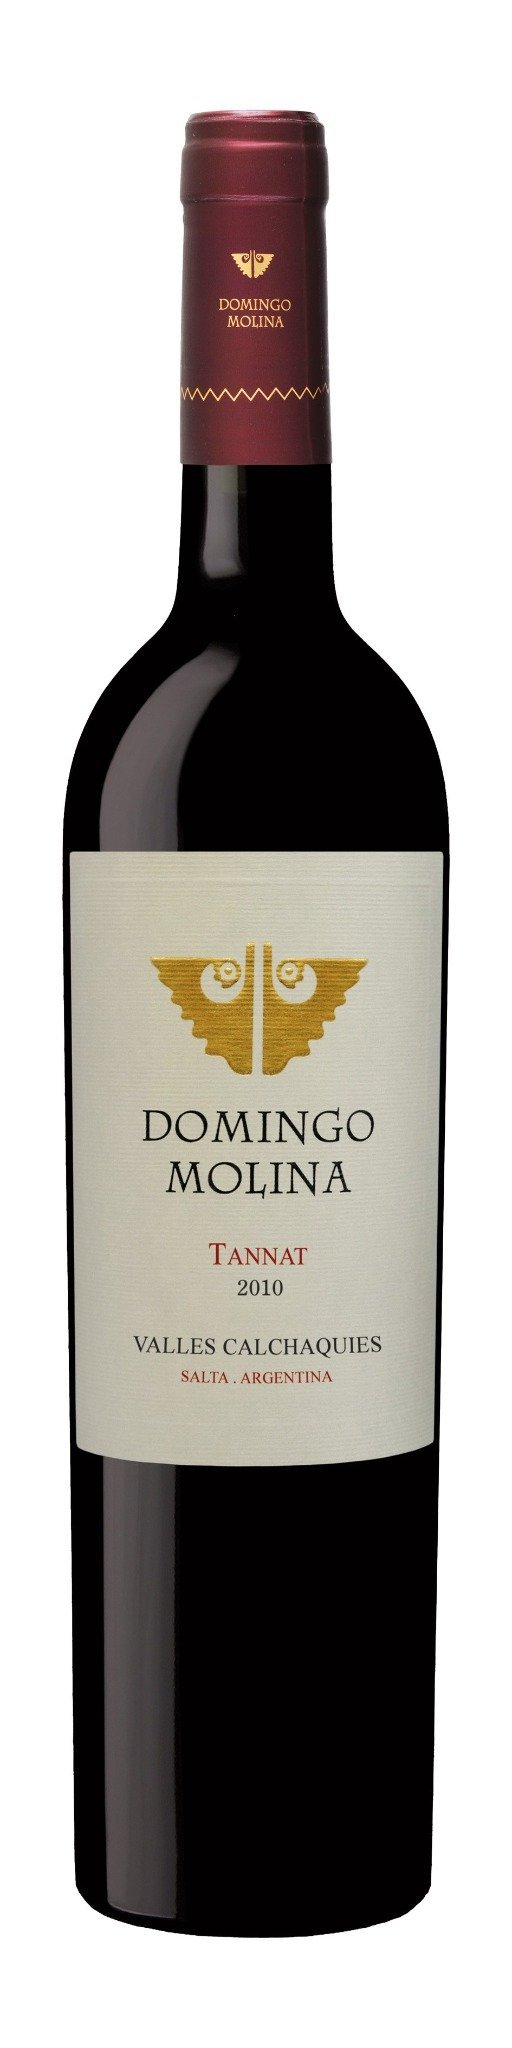 Domingo Molina Tannat - Mi-bodeguita.com